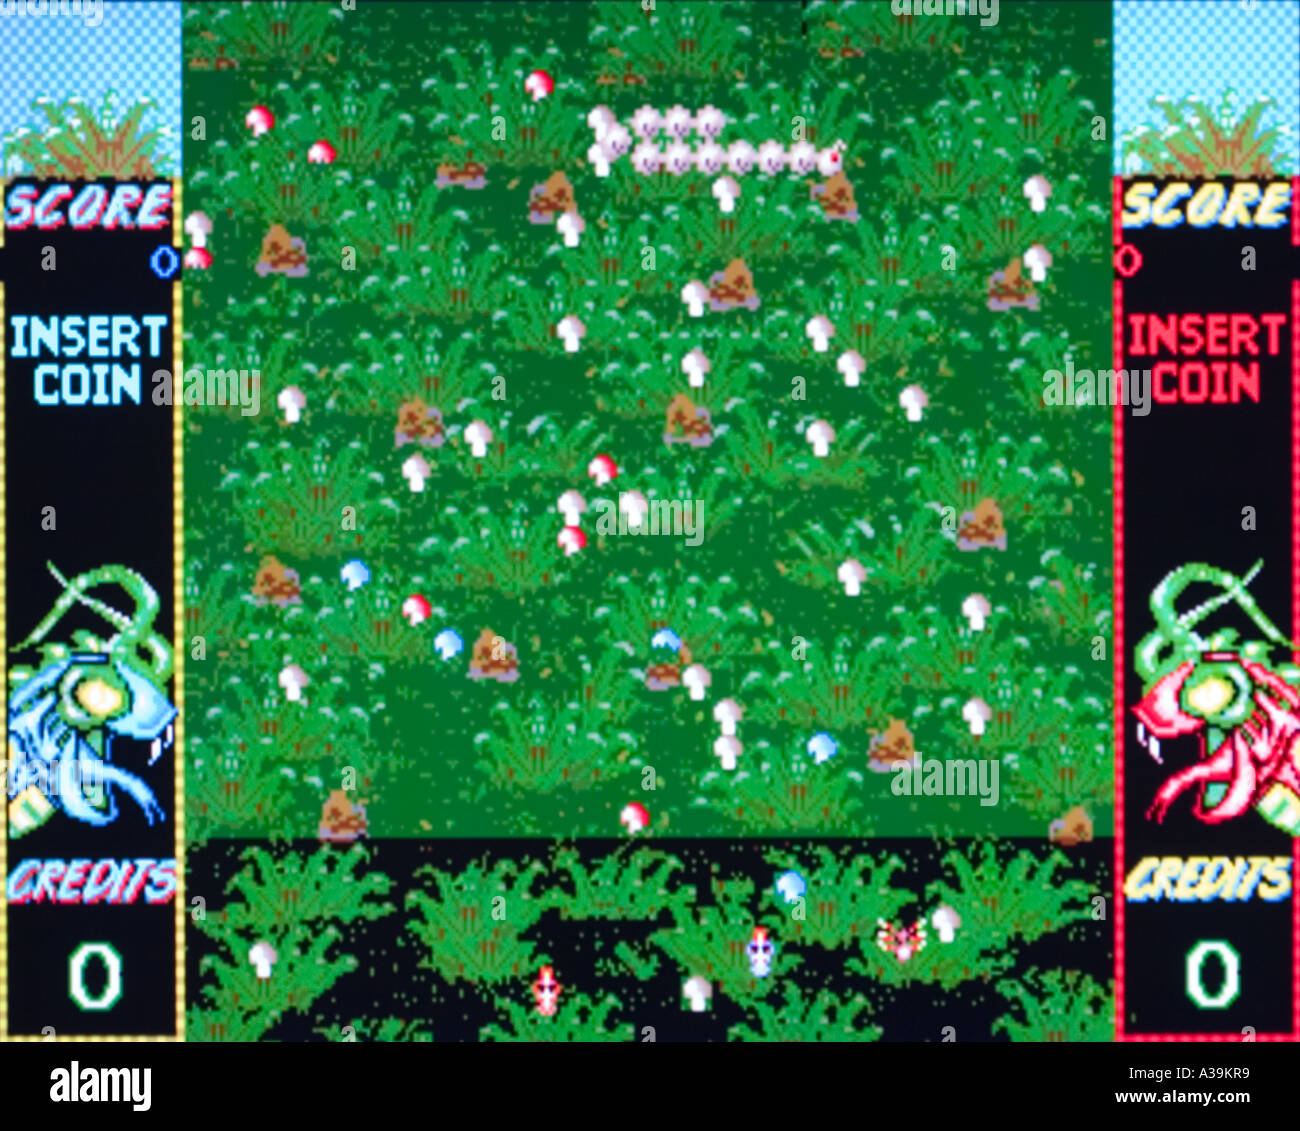 Arcade Classics Super Centipede Atari Games 1992 vintage arcade videogame screenshot - EDITORIAL USE ONLY Stock Photo